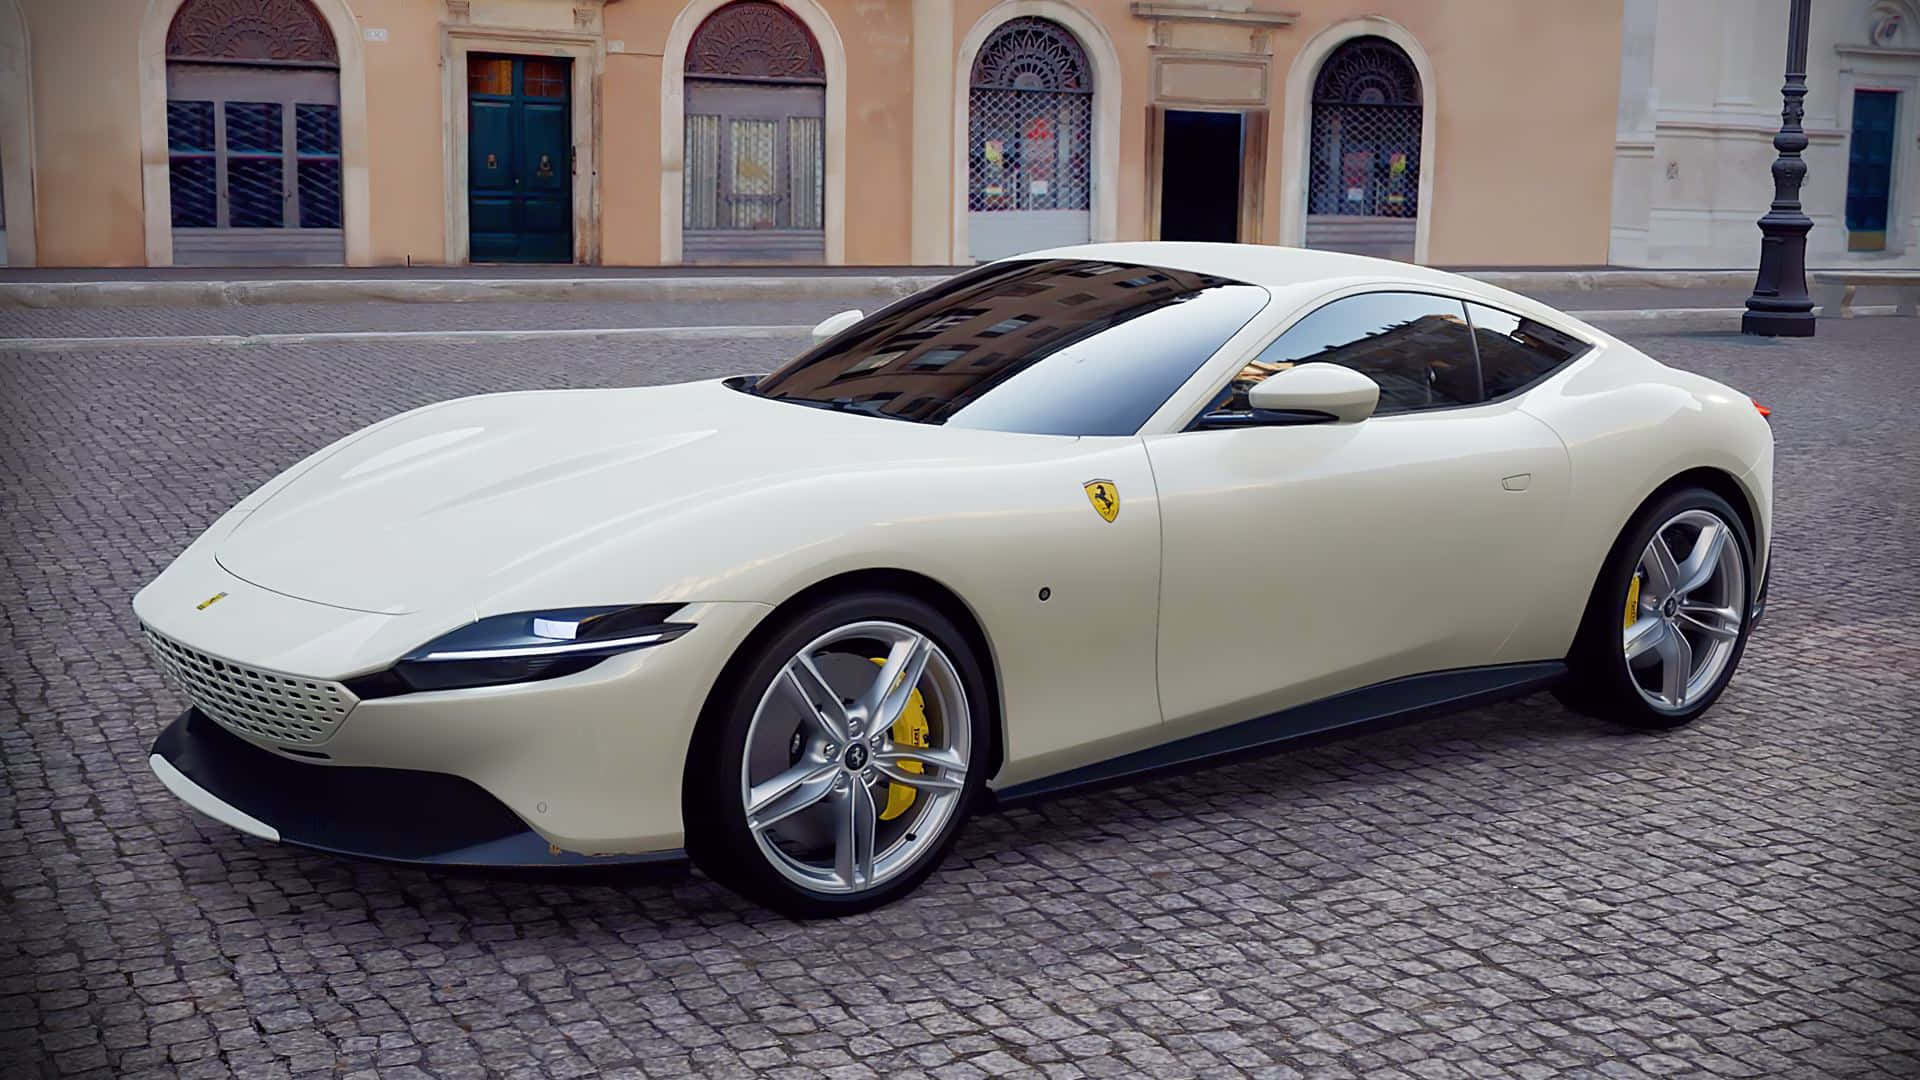 Caption: Sleek and Stylish: The Ferrari Roma Unleashed Wallpaper